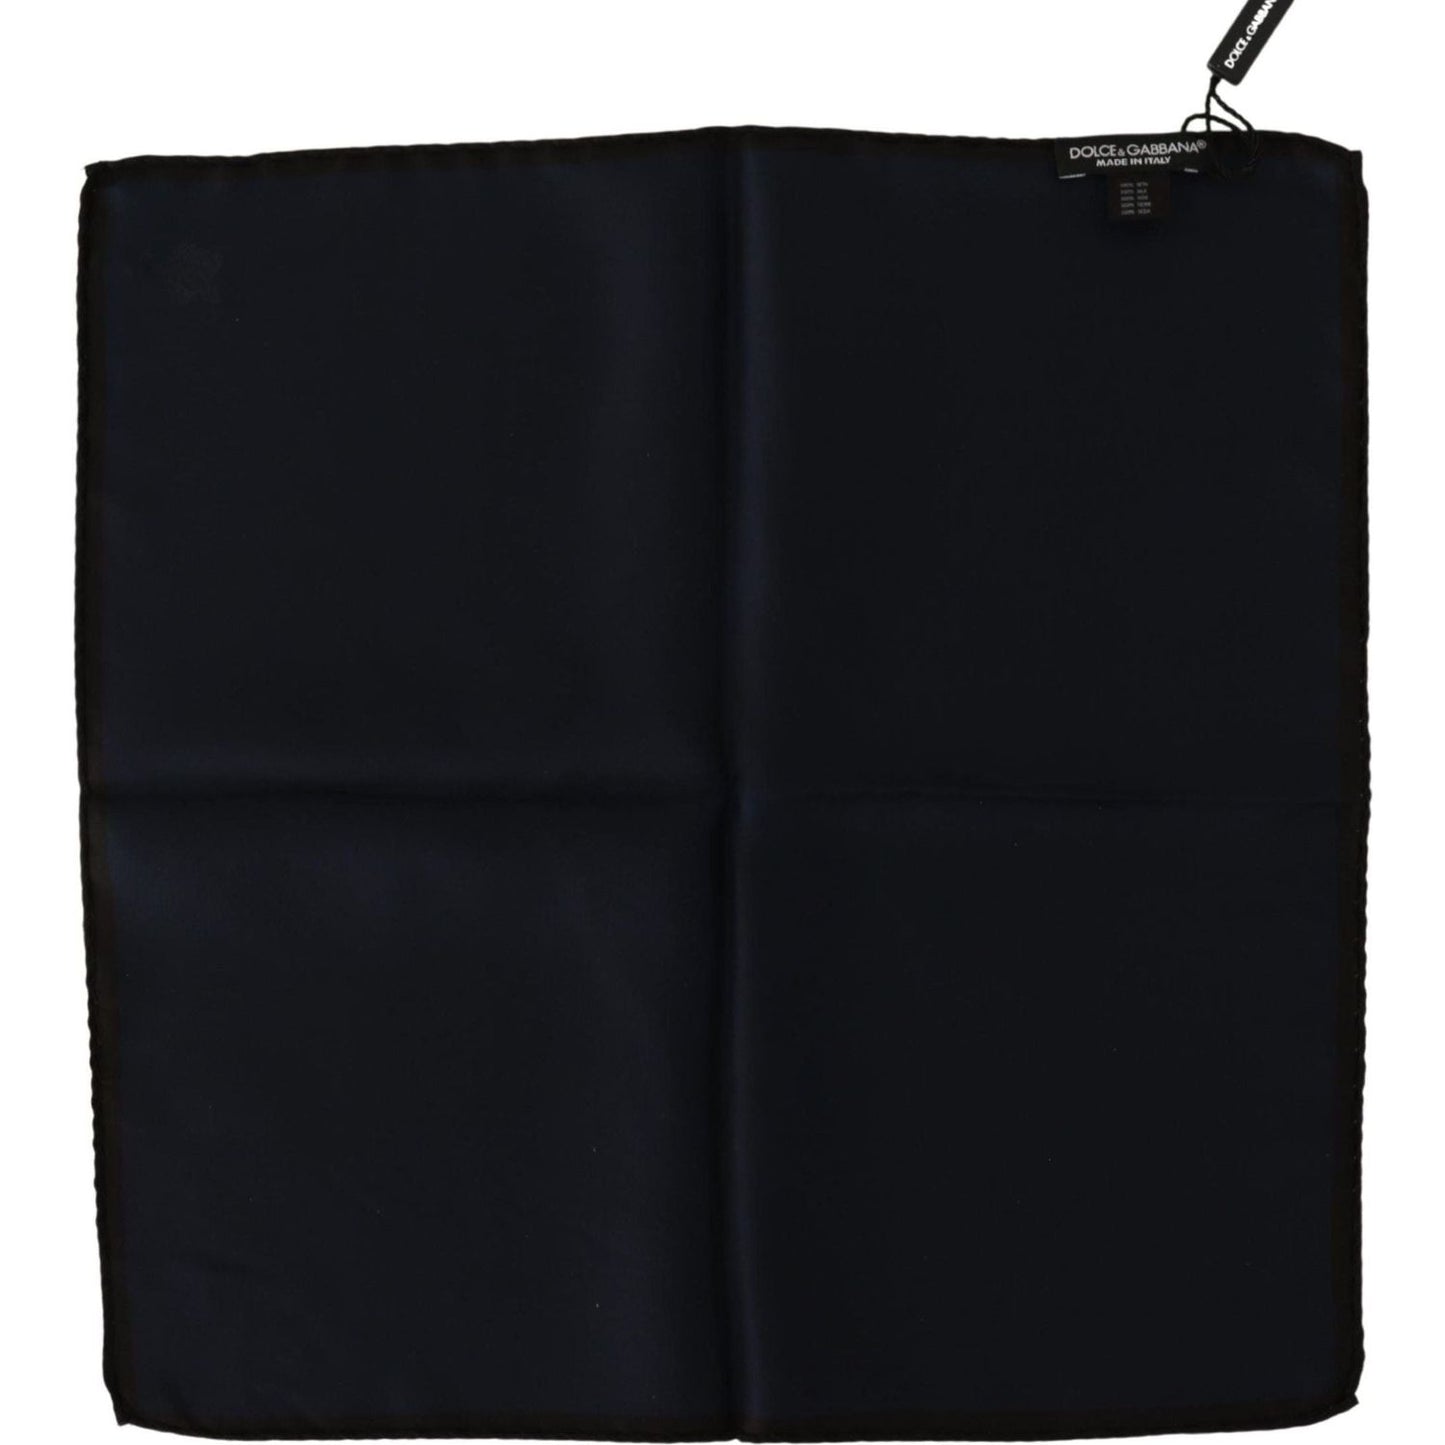 Dolce & Gabbana Elegant Silk Black Pocket Square Handkerchief black-square-handkerchief-100-silk-scarf IMG_8148-2fb62e1e-4af.jpg